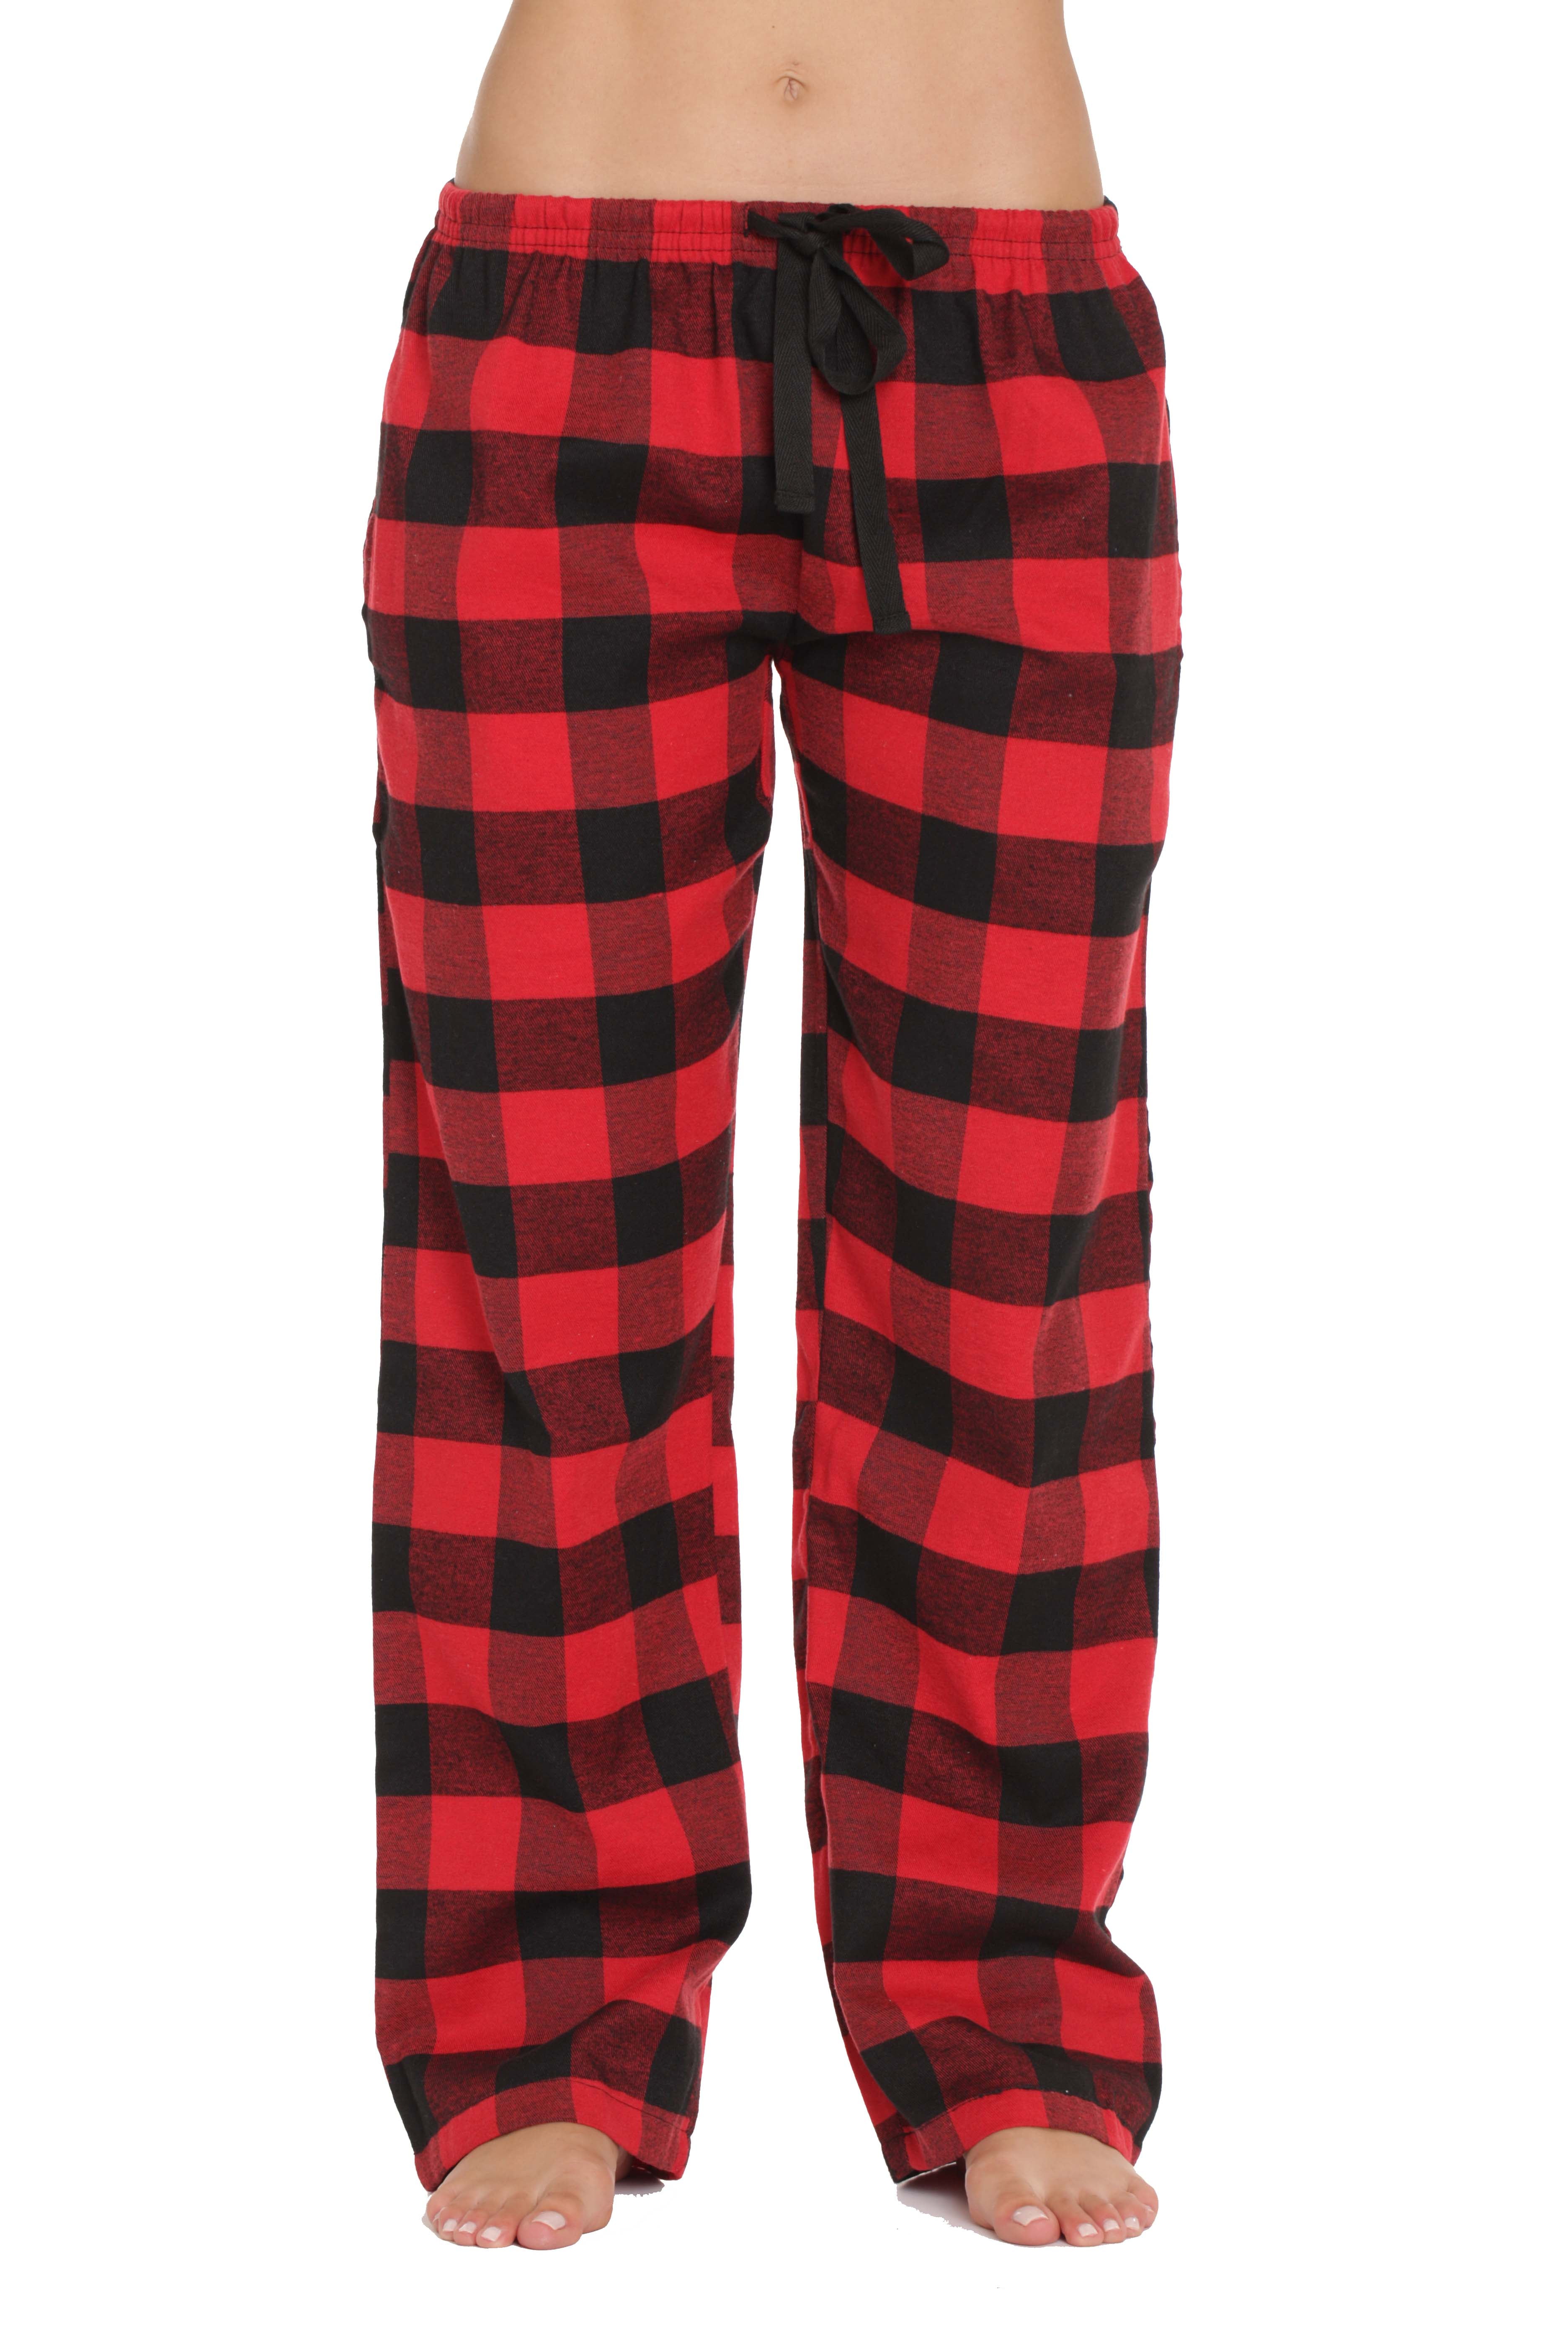 #followme Buffalo Plaid Flannel Pajama Pants for Women with Pockets (Red -  Buffalo Plaid, 2X)